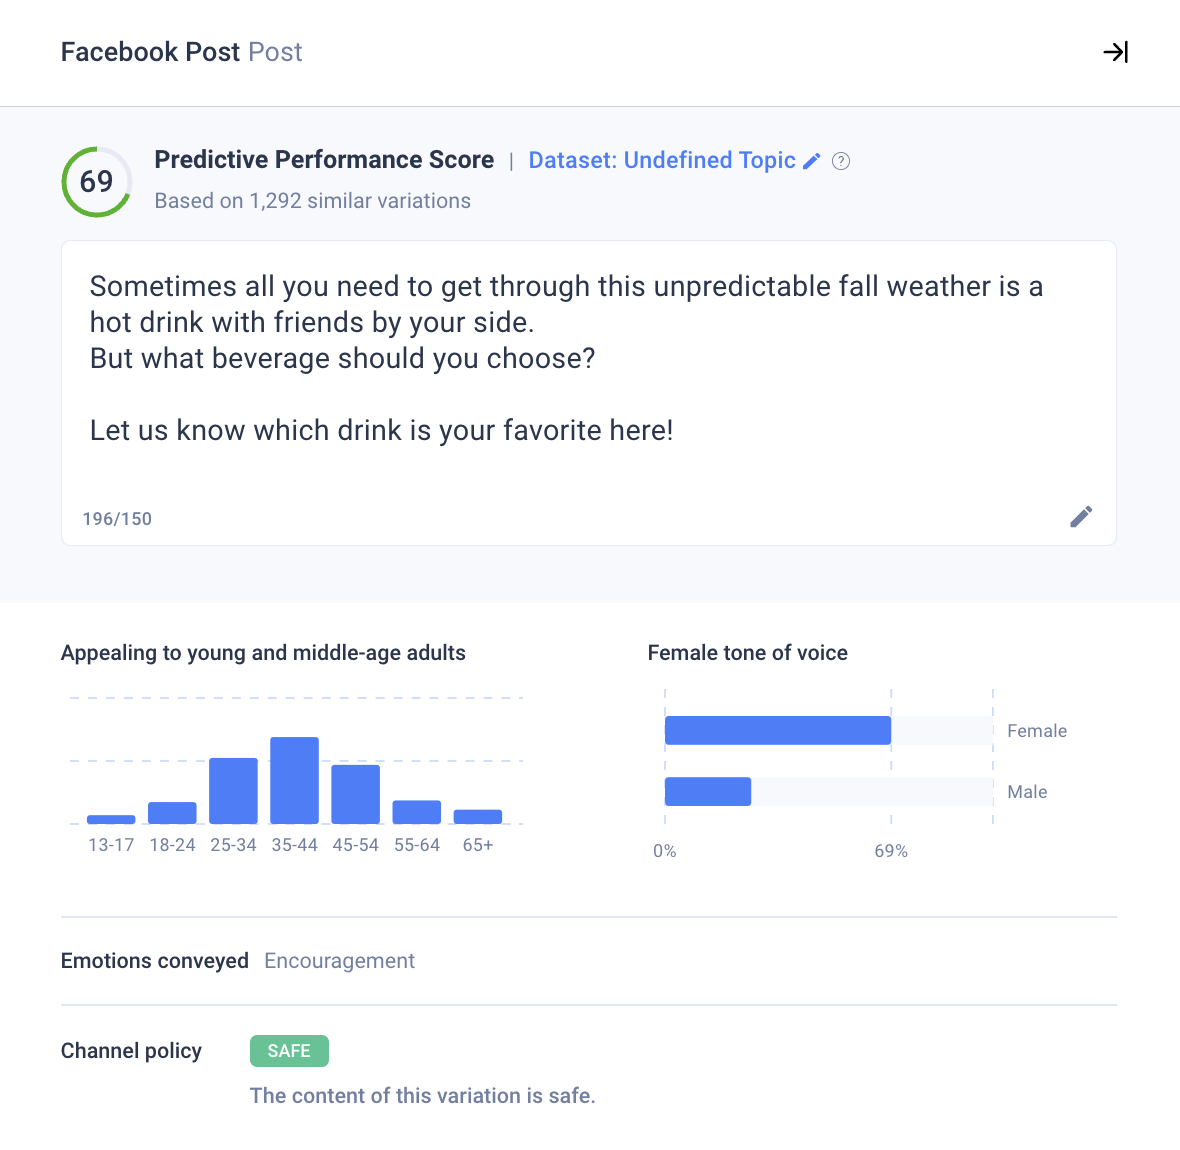 Facebook Post Generator, Gen AI Built for Marketers